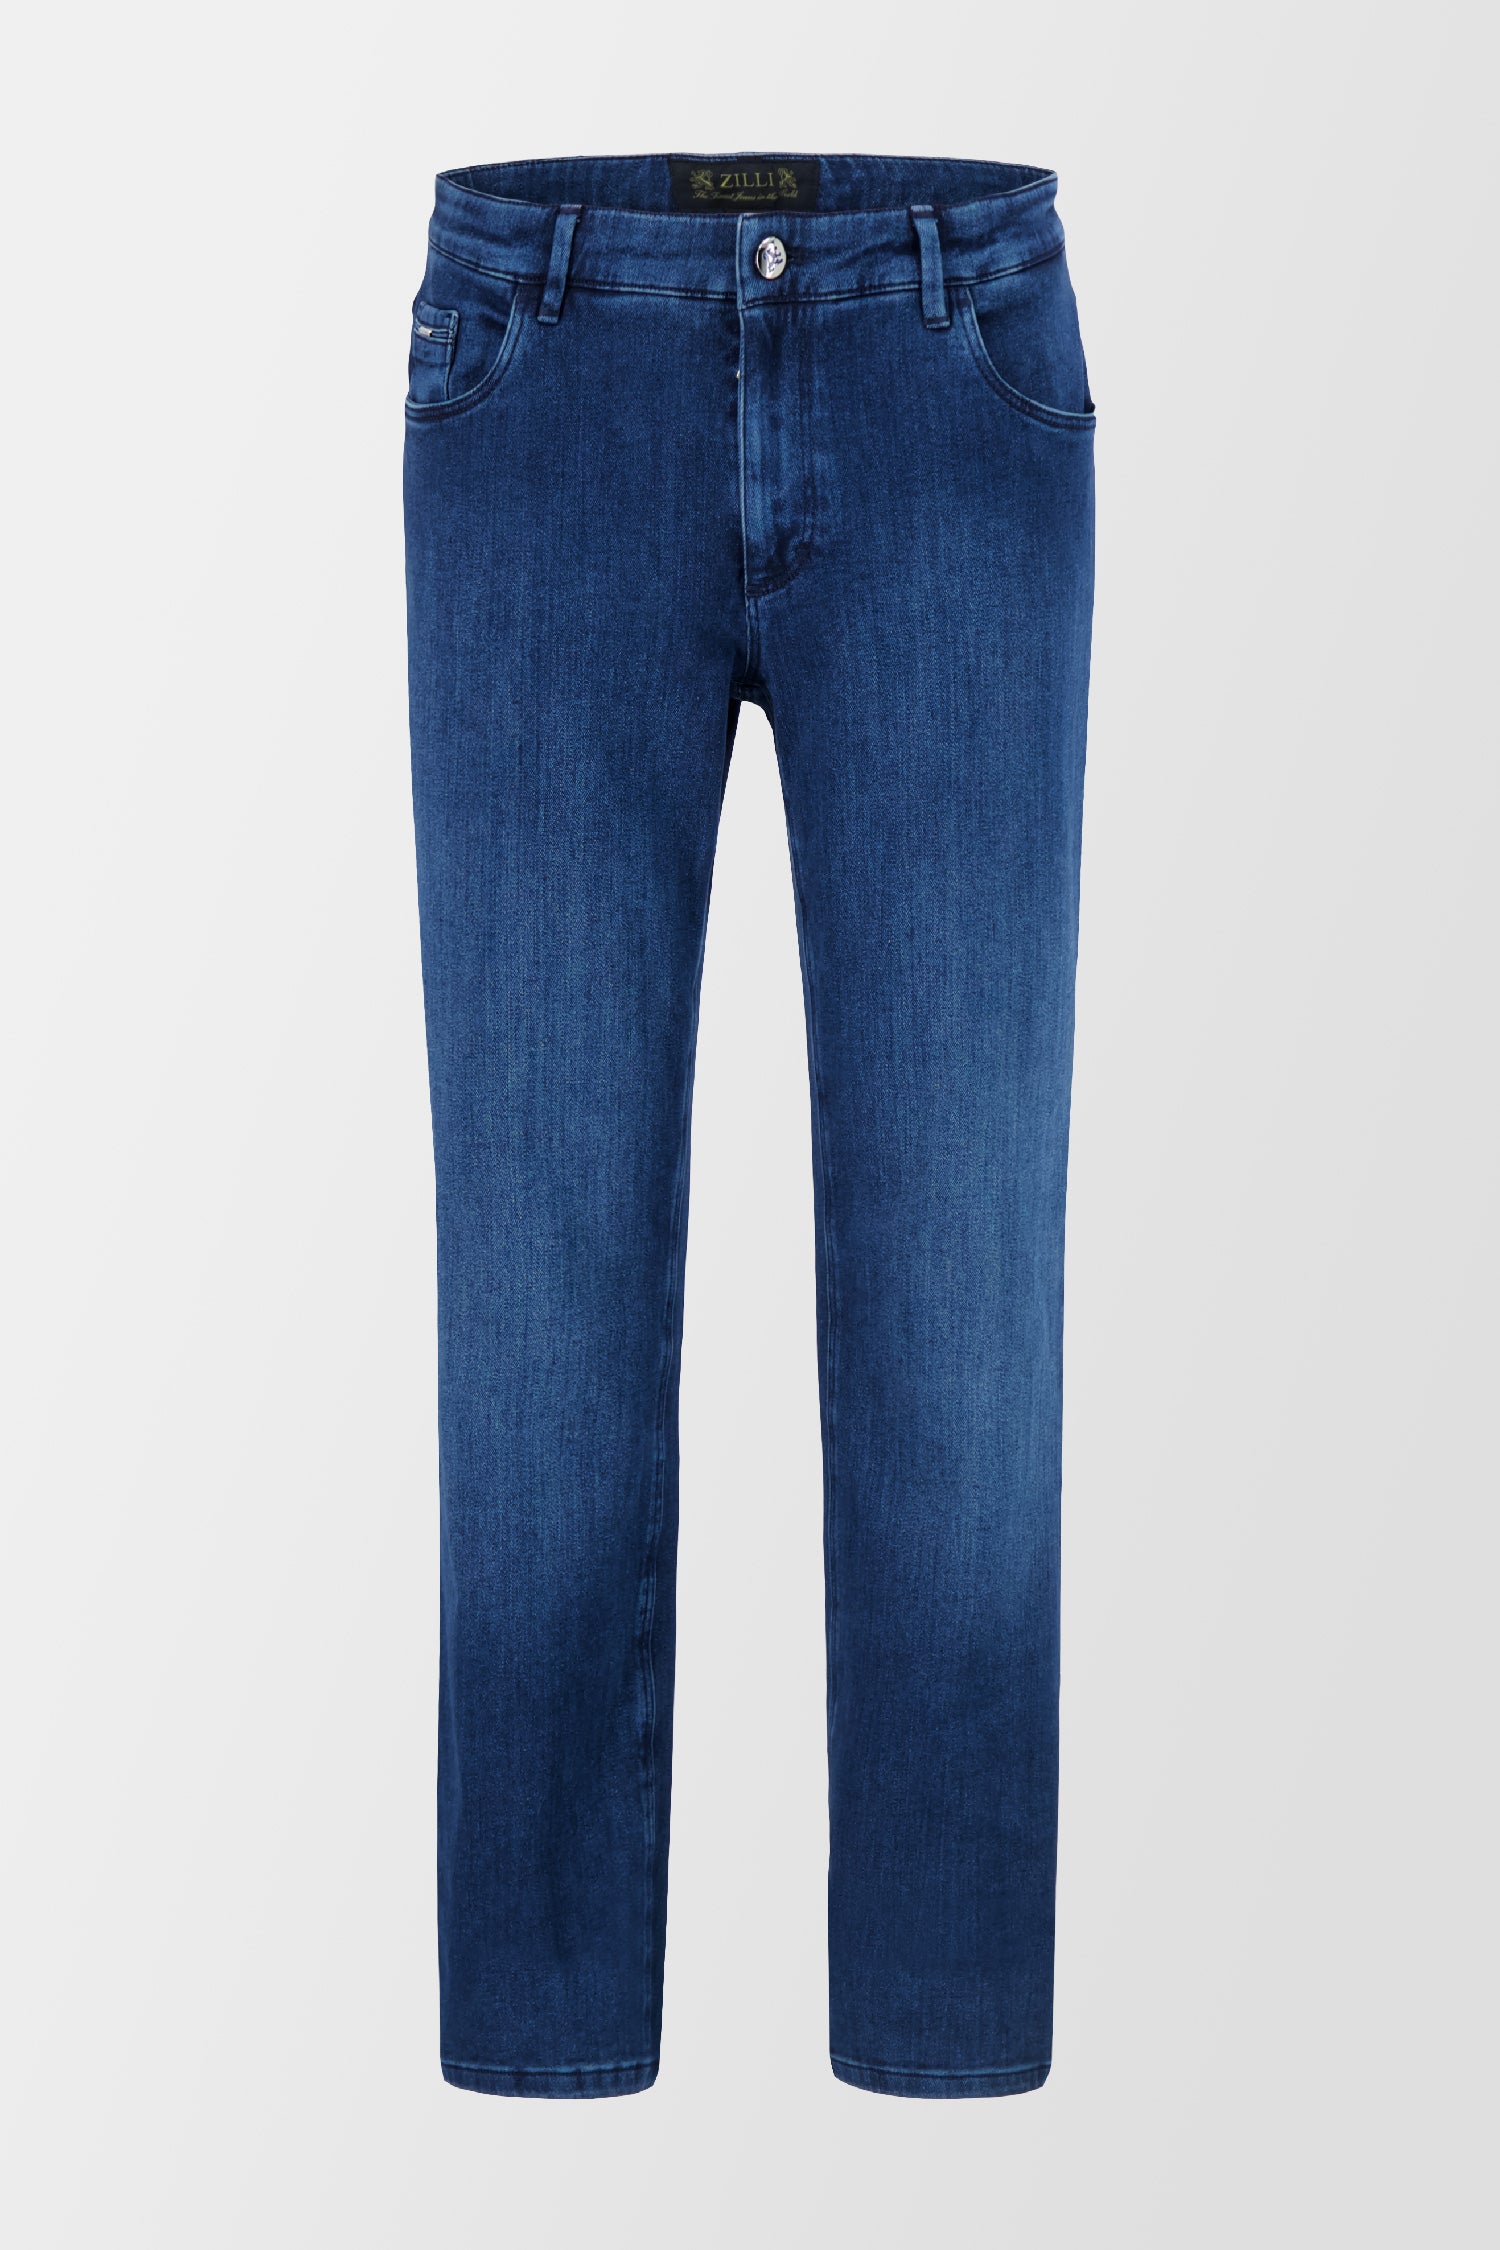 Zilli Classic Blue Jeans